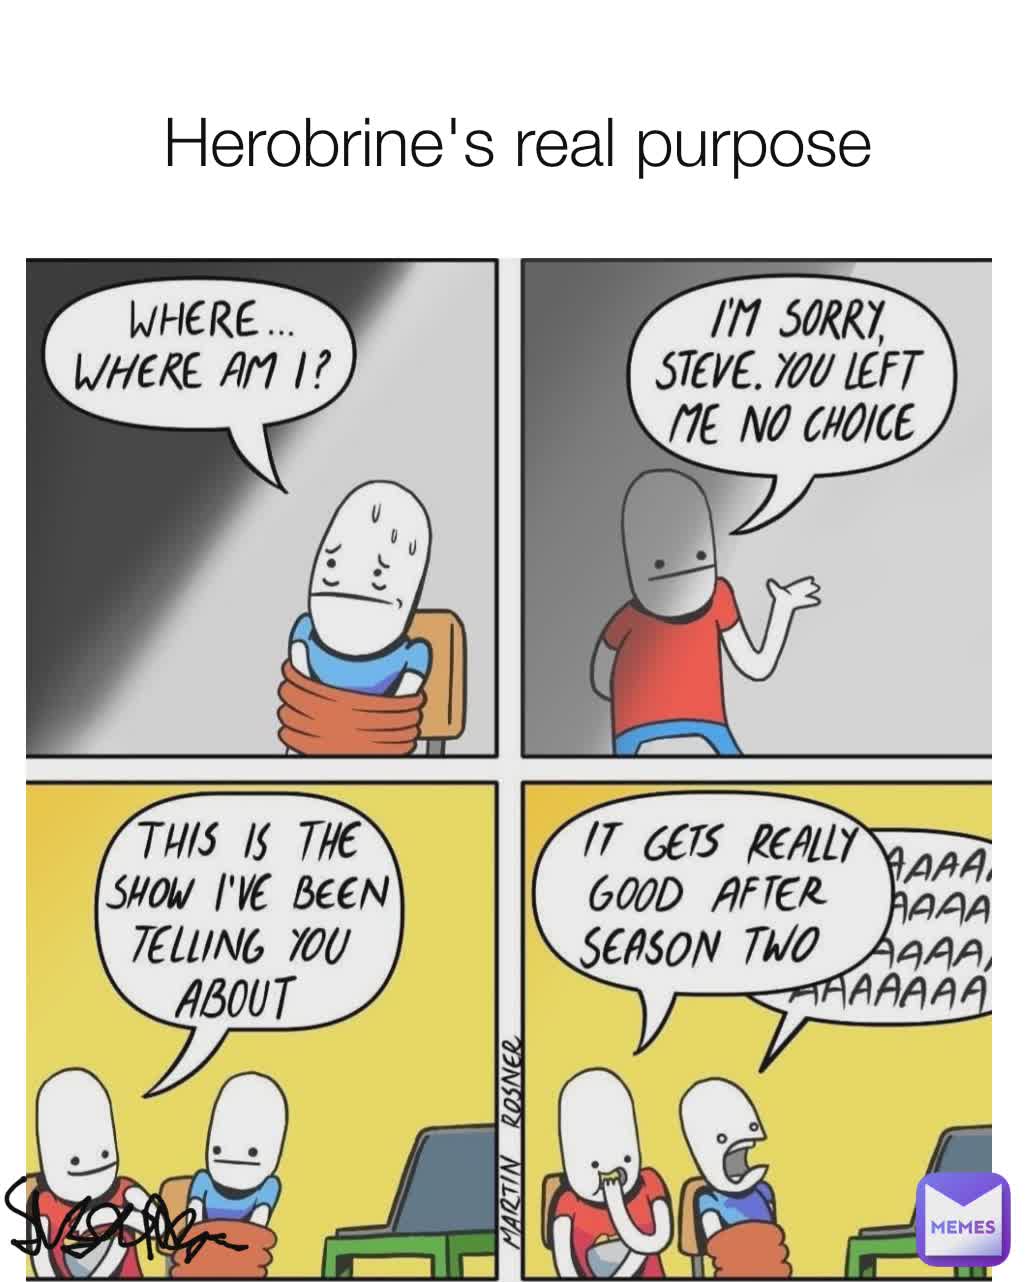 Herobrine's real purpose